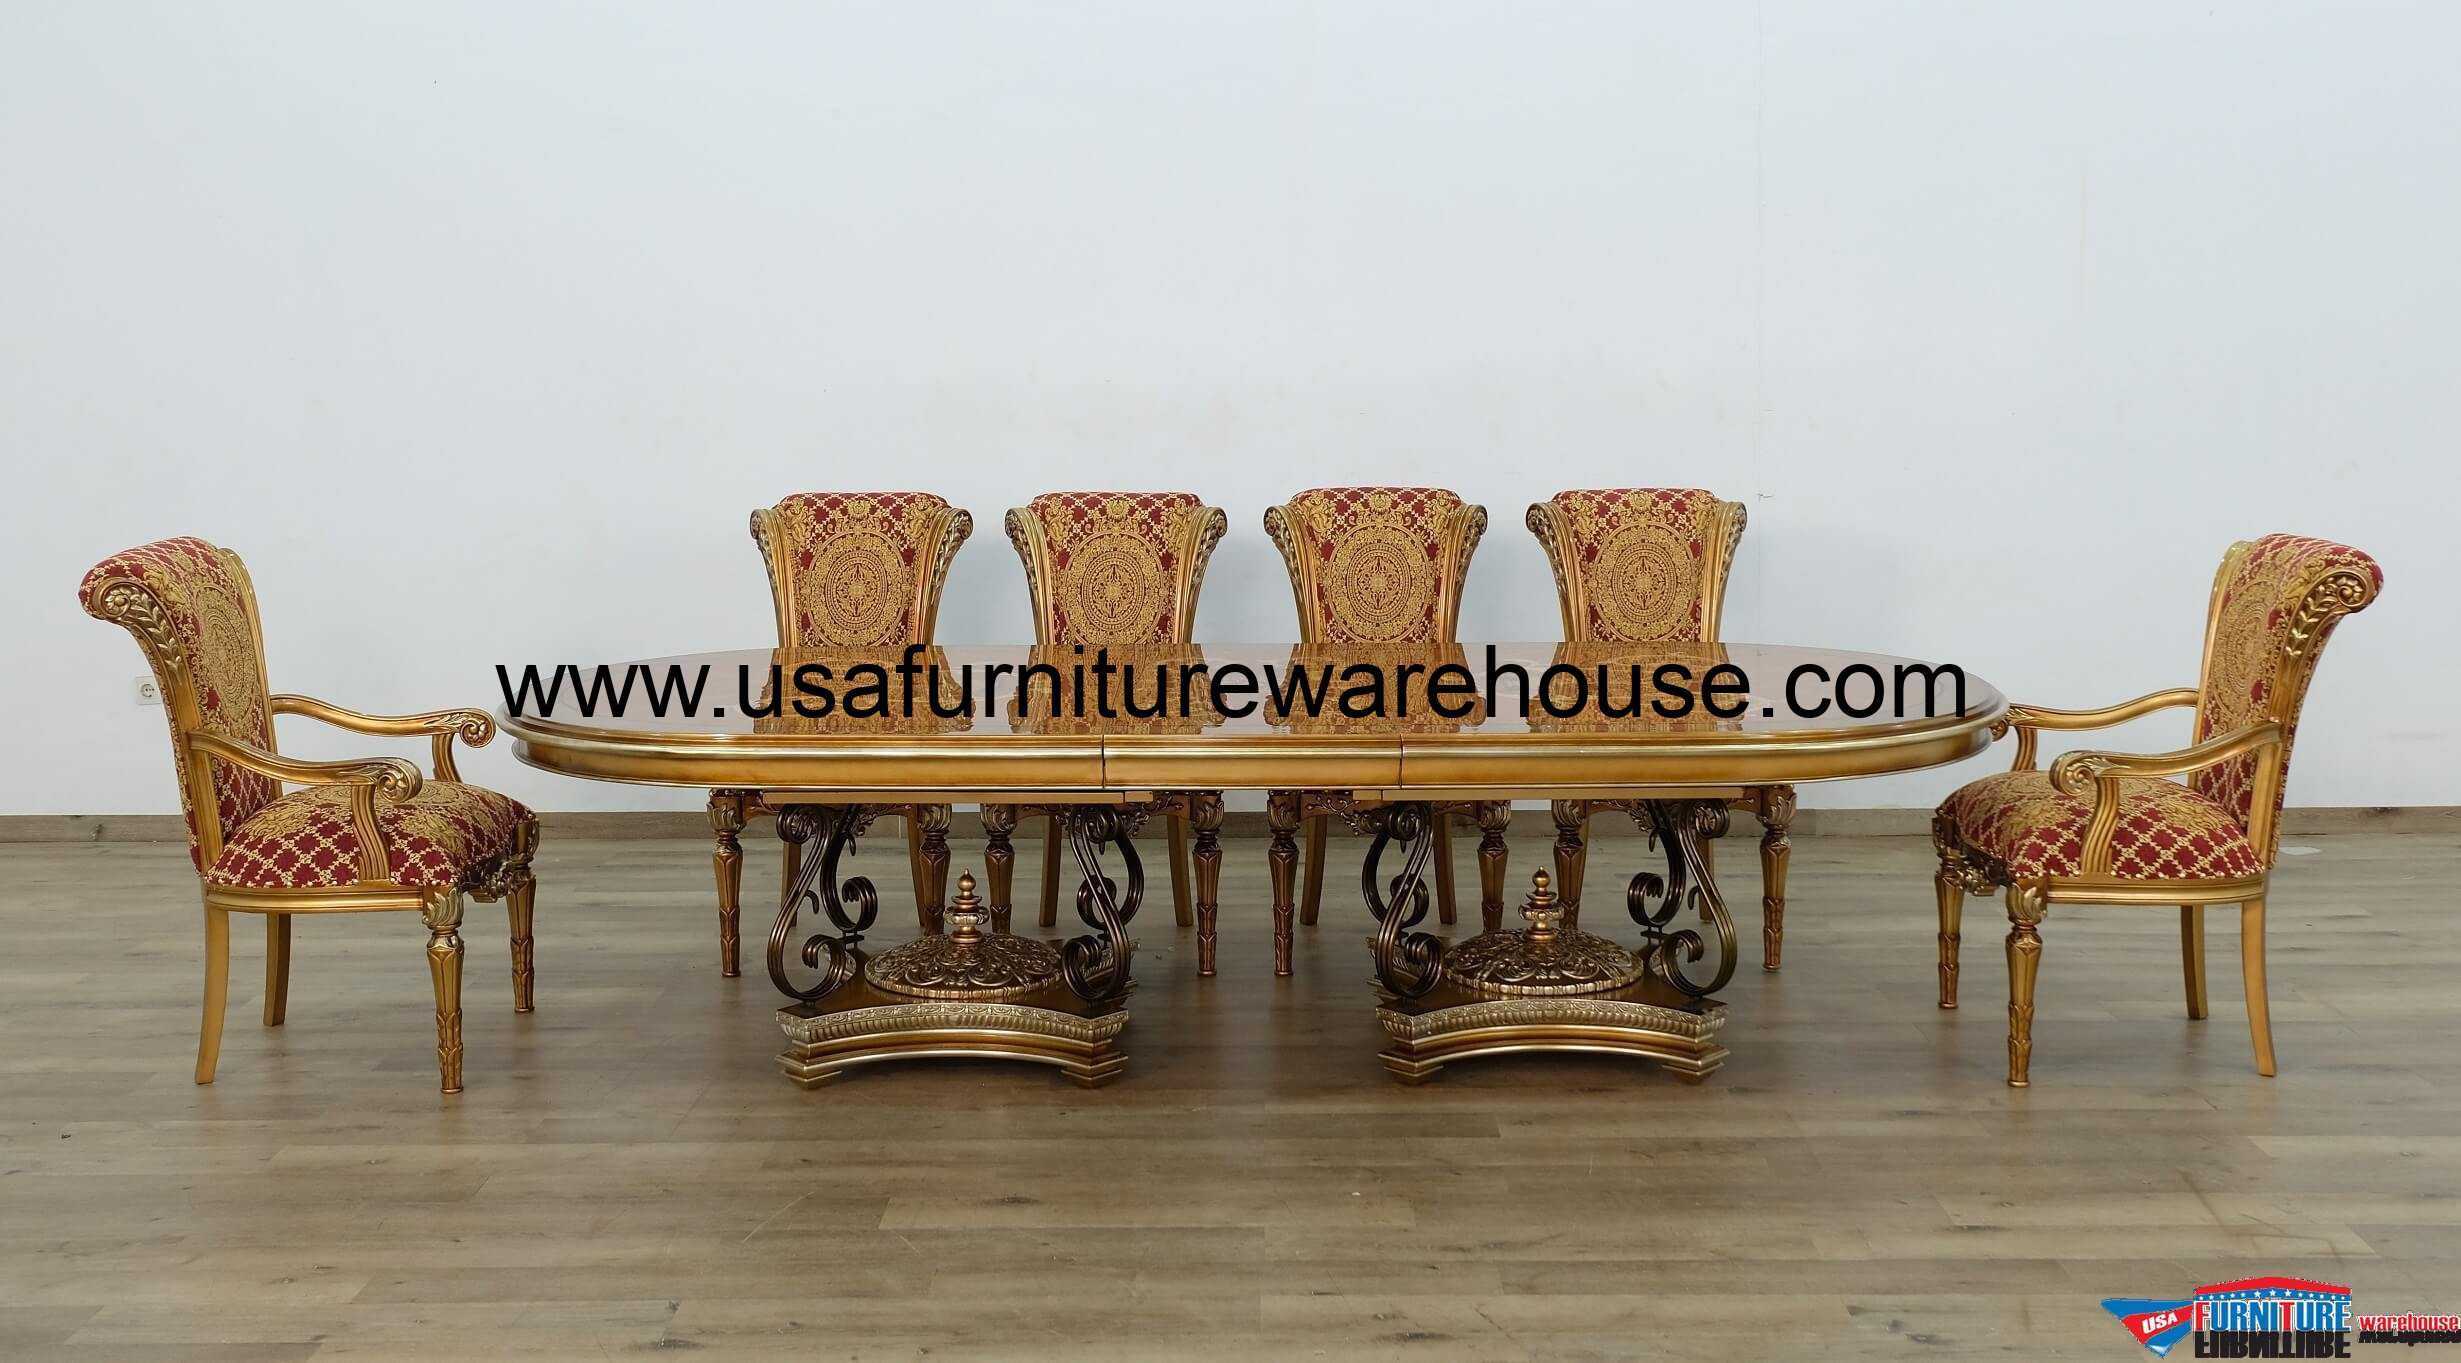 Valentina Luxury Dining Arm Chair Beige-Gold Leaf - Set of 2 - USA  Warehouse Furniture